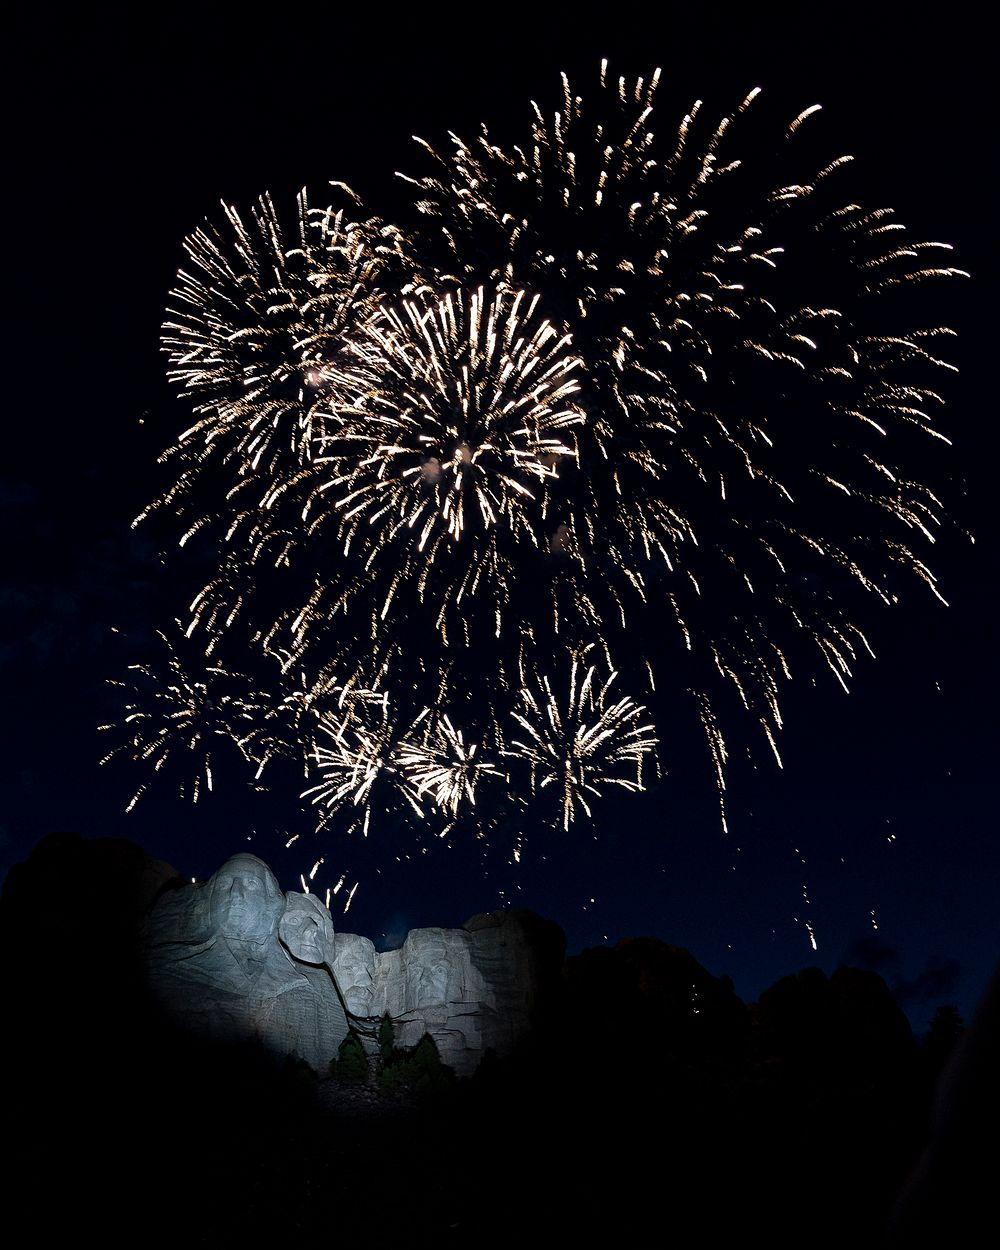 Mount Rushmore Fireworks Celebration at the Mount Rushmore National Memorial in Keystone, S.D. Original public domain image…